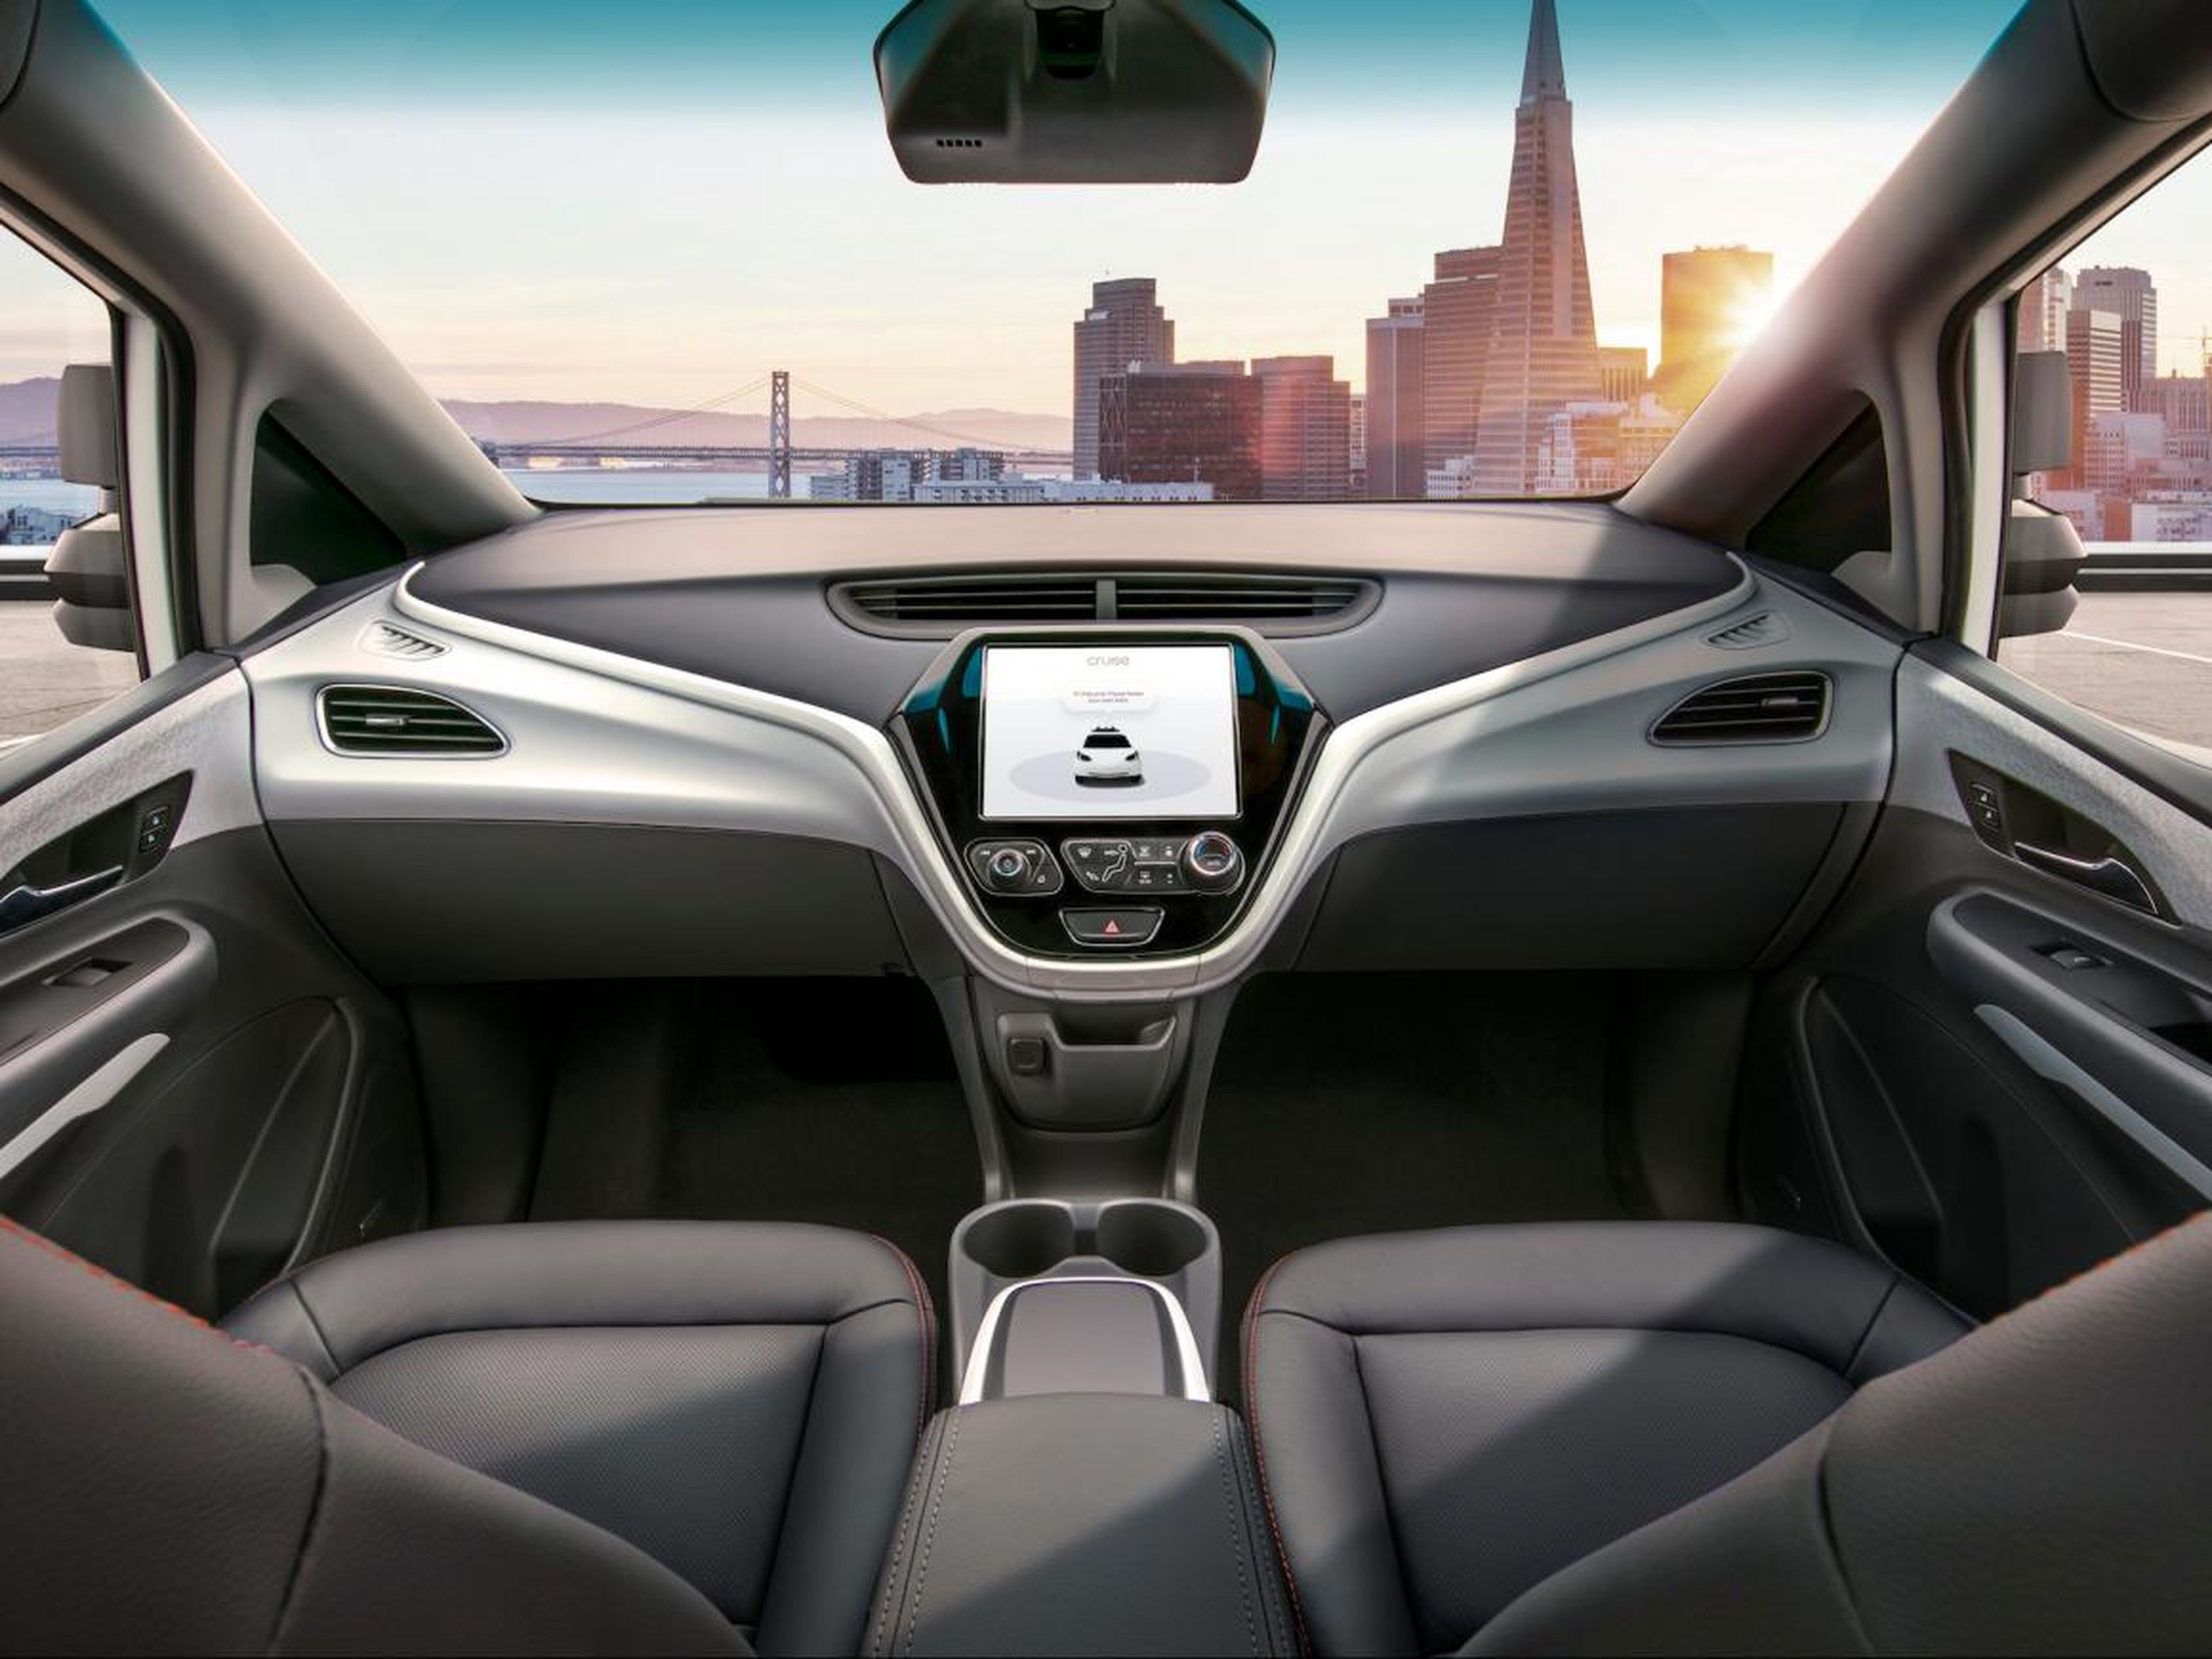 A rendering for a General Motors self-driving car.